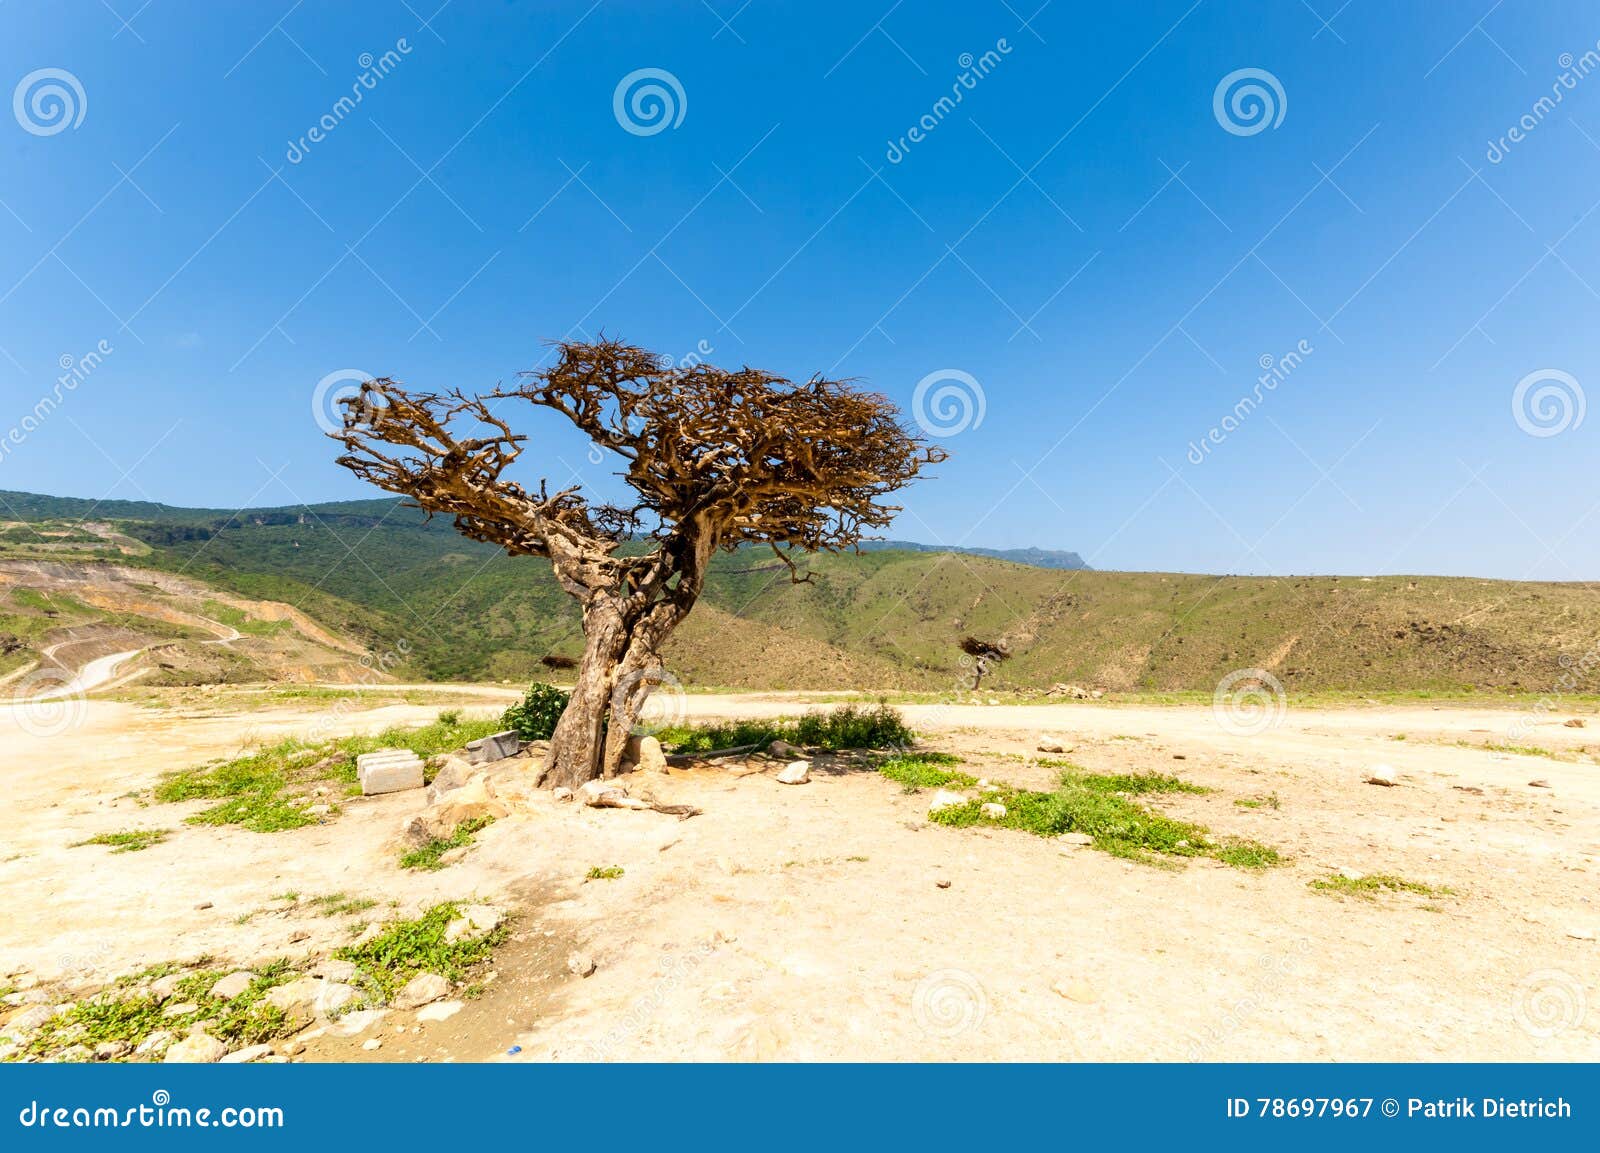 frankincense tree in salalah, dhofar, oman